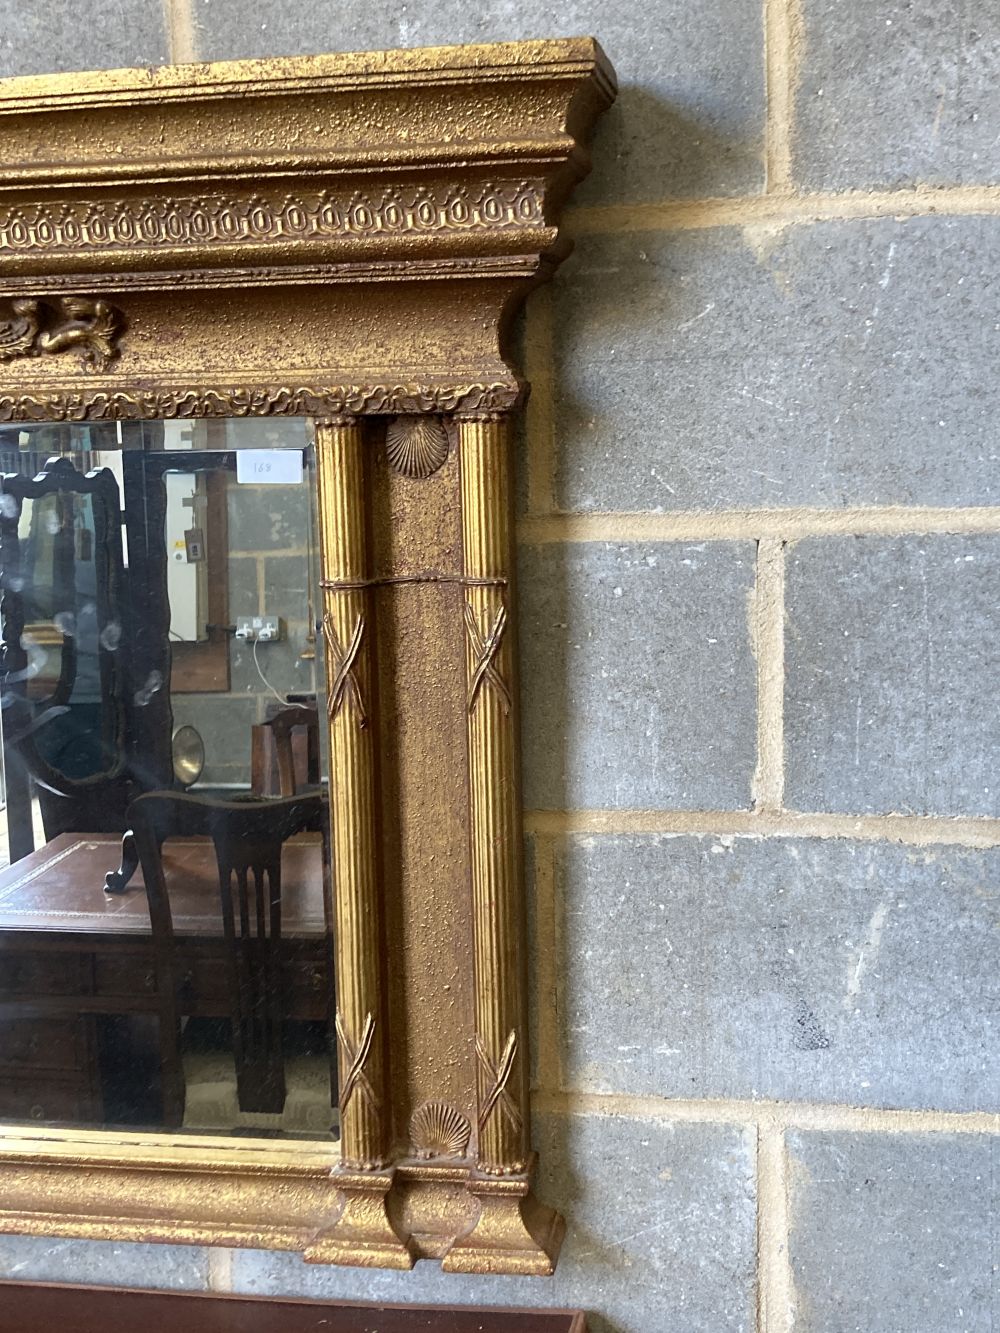 A gilt-framed overmantel mirror, width 138cm, height 91cm